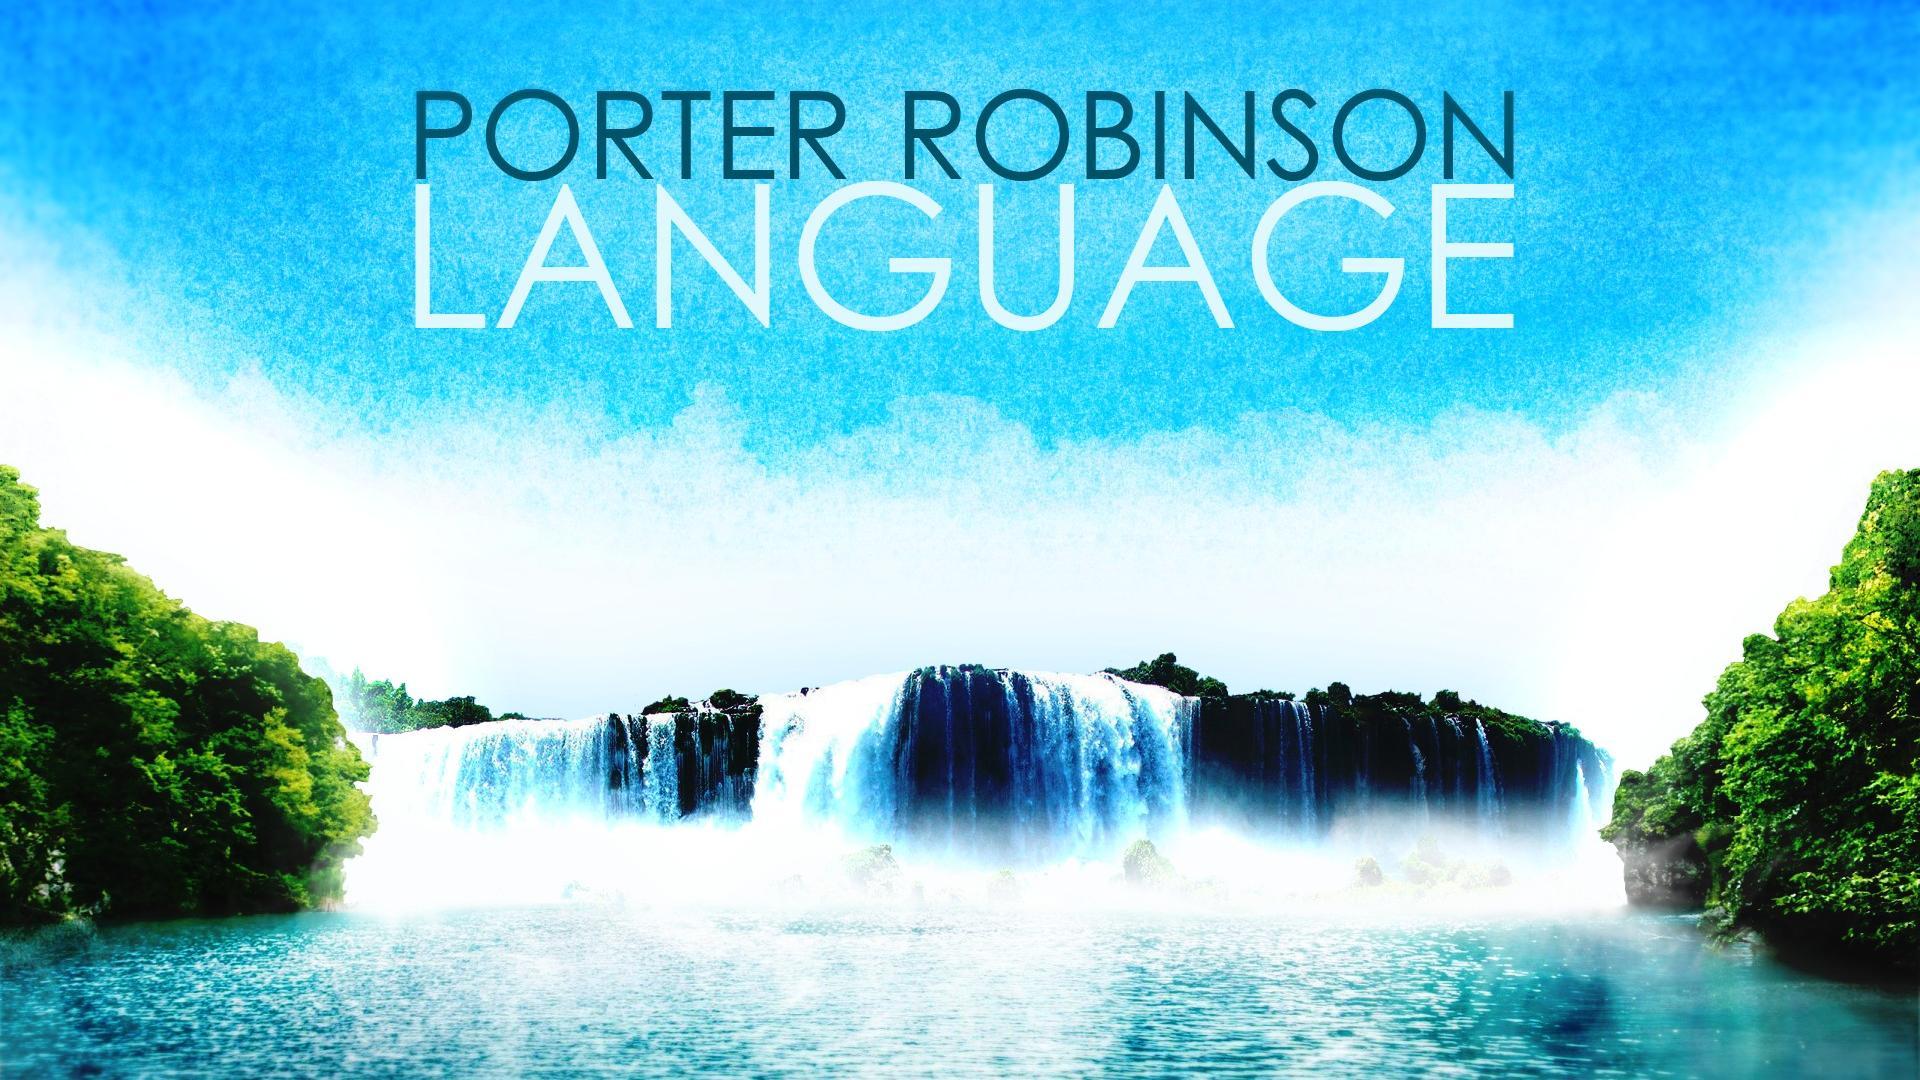 Lakes waterfalls language bushes electronic porter robinson